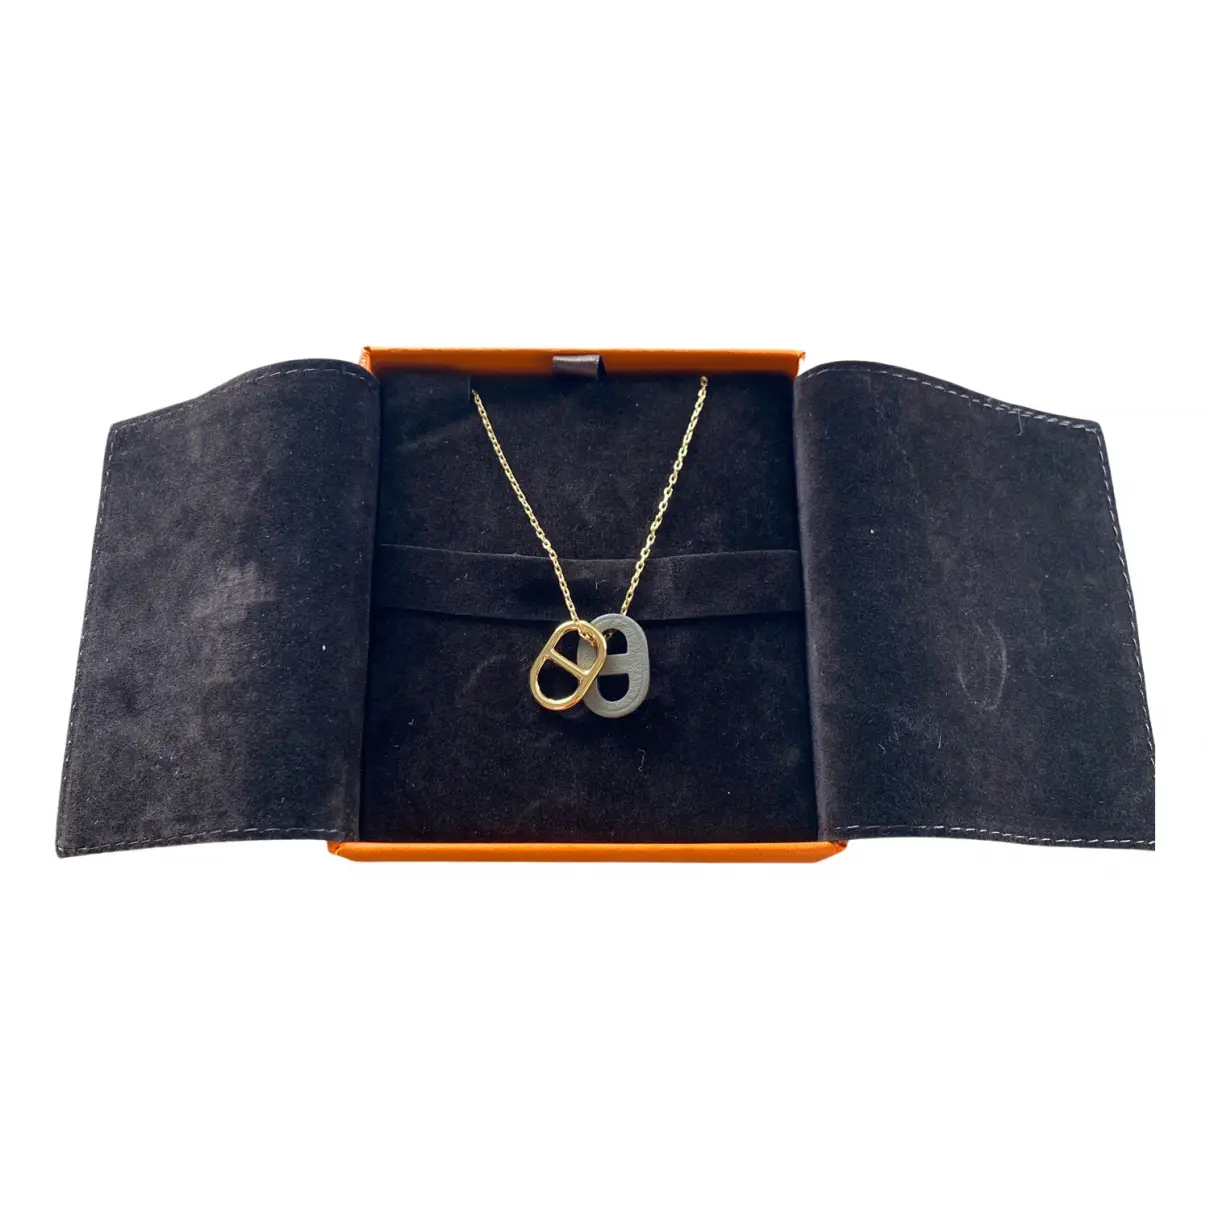 O'Maillon leather necklace Hermès